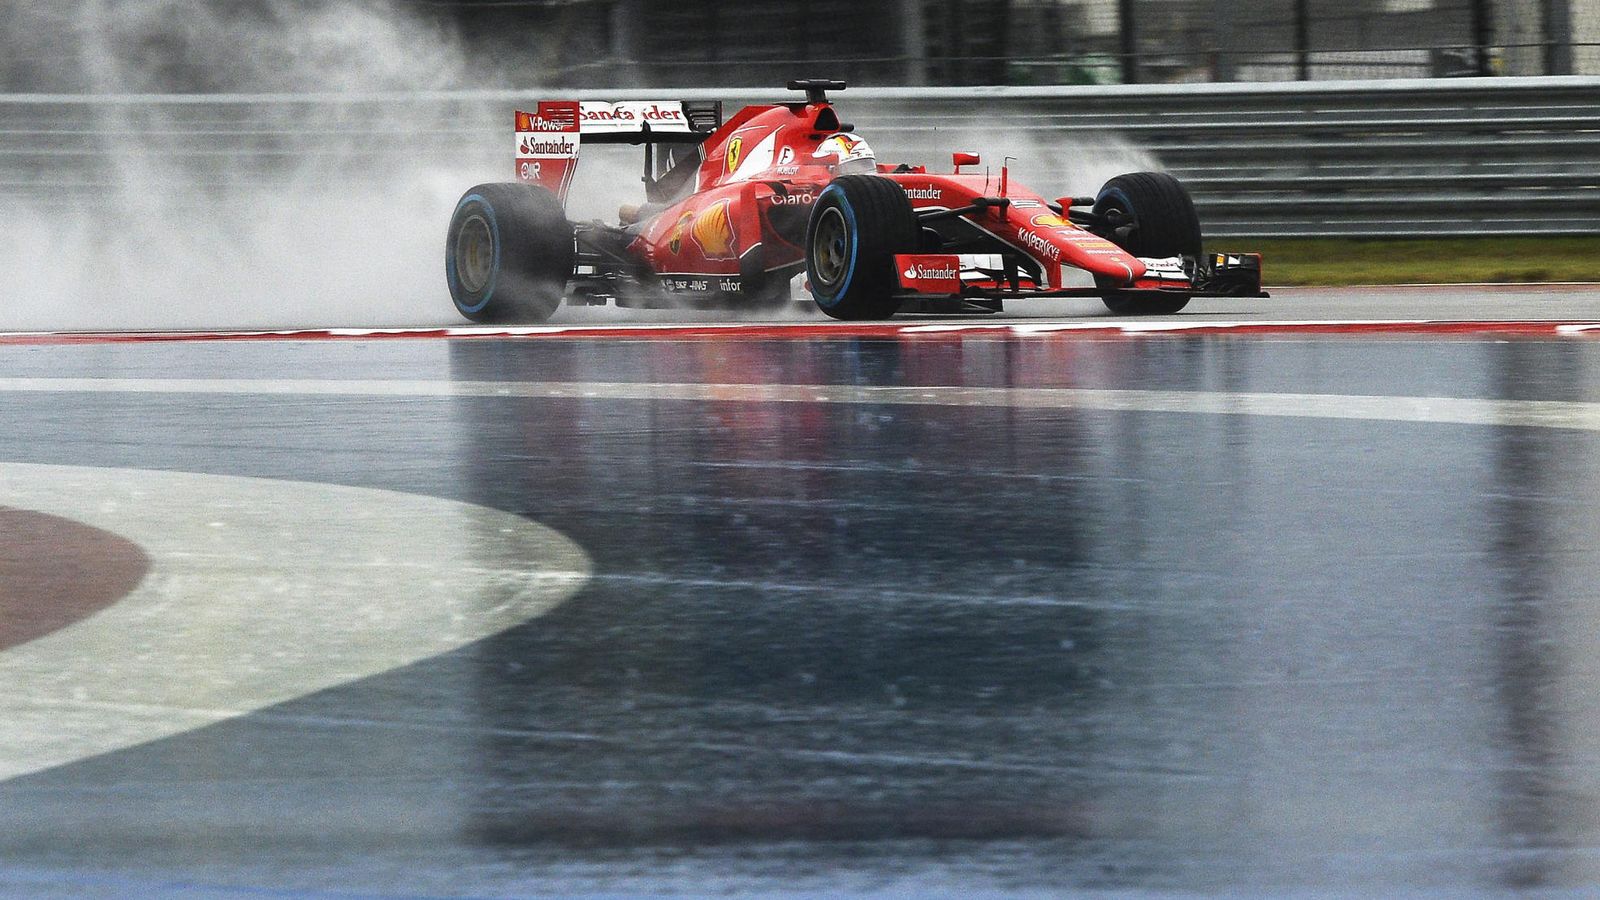 Foto: Sebastian Vettel, el año pasado, en la pista de Austin.